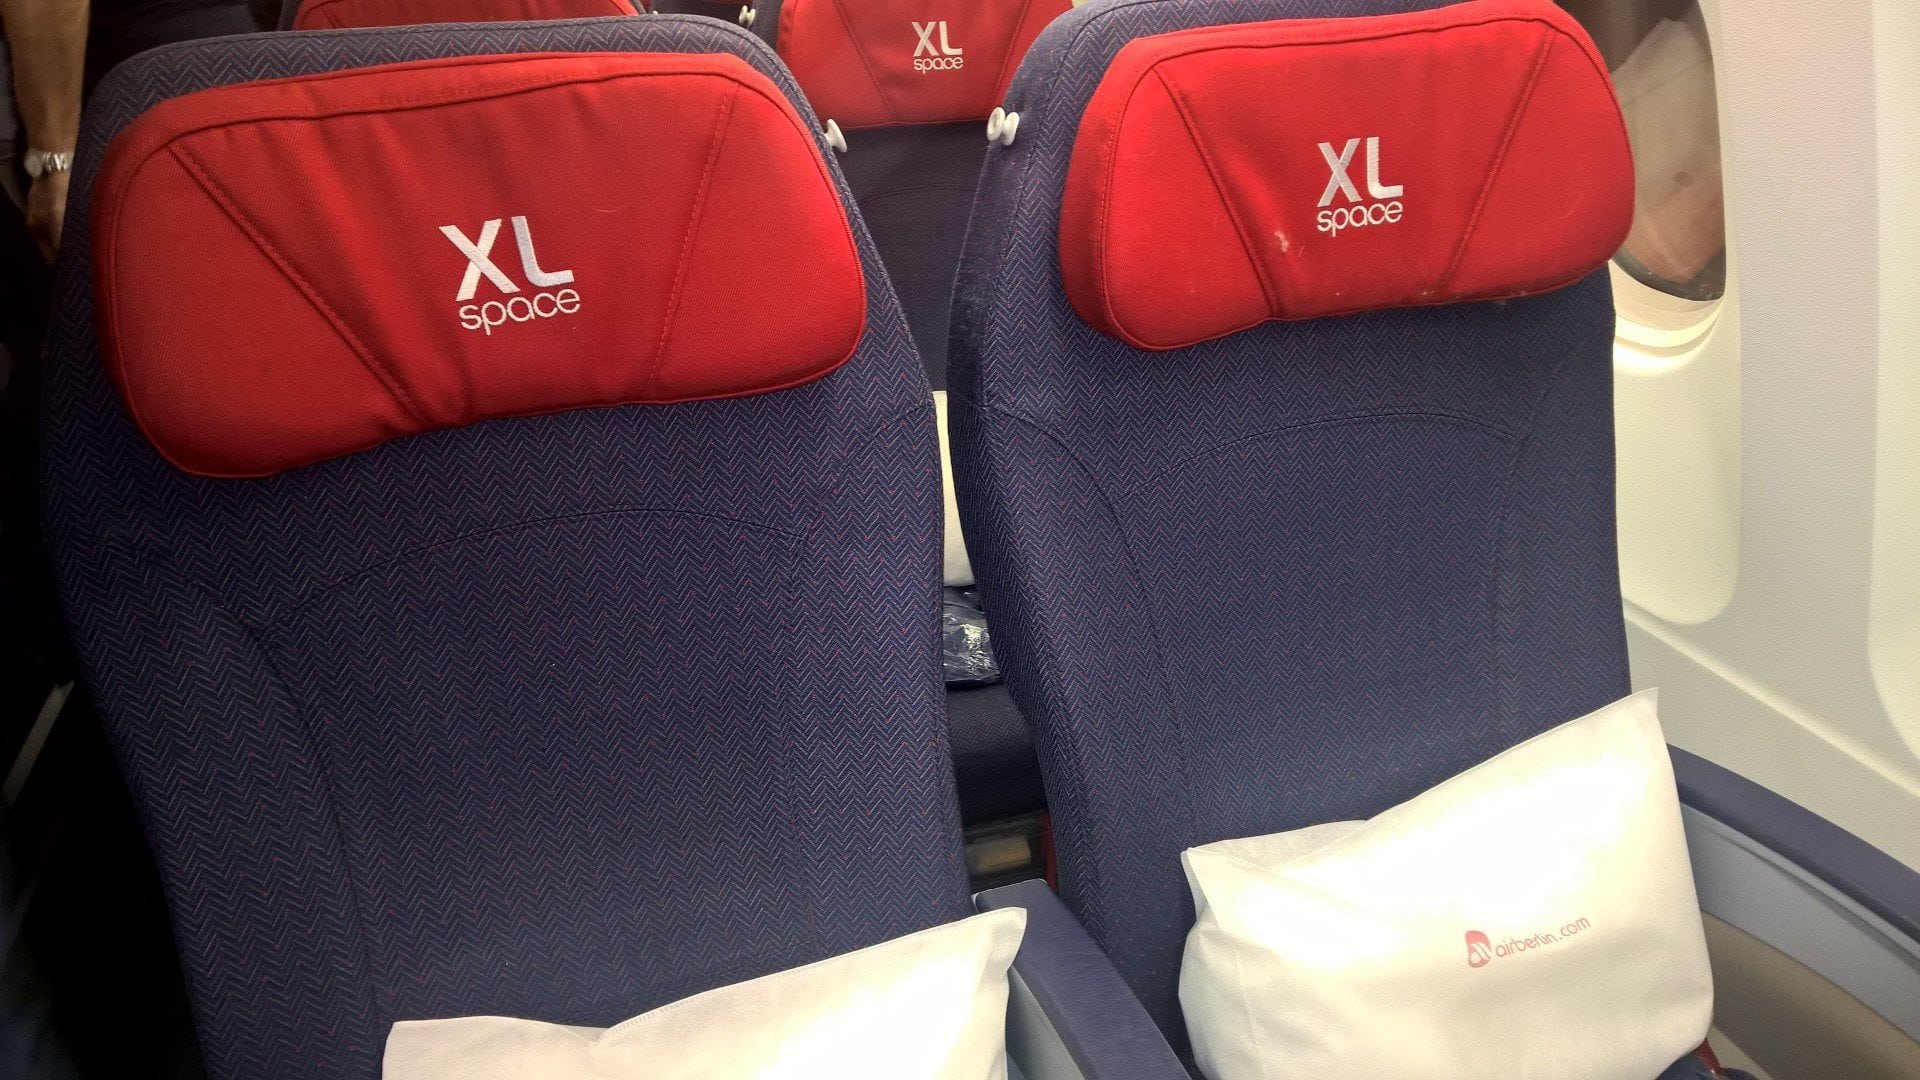 airberlin Economy Class XL Seats